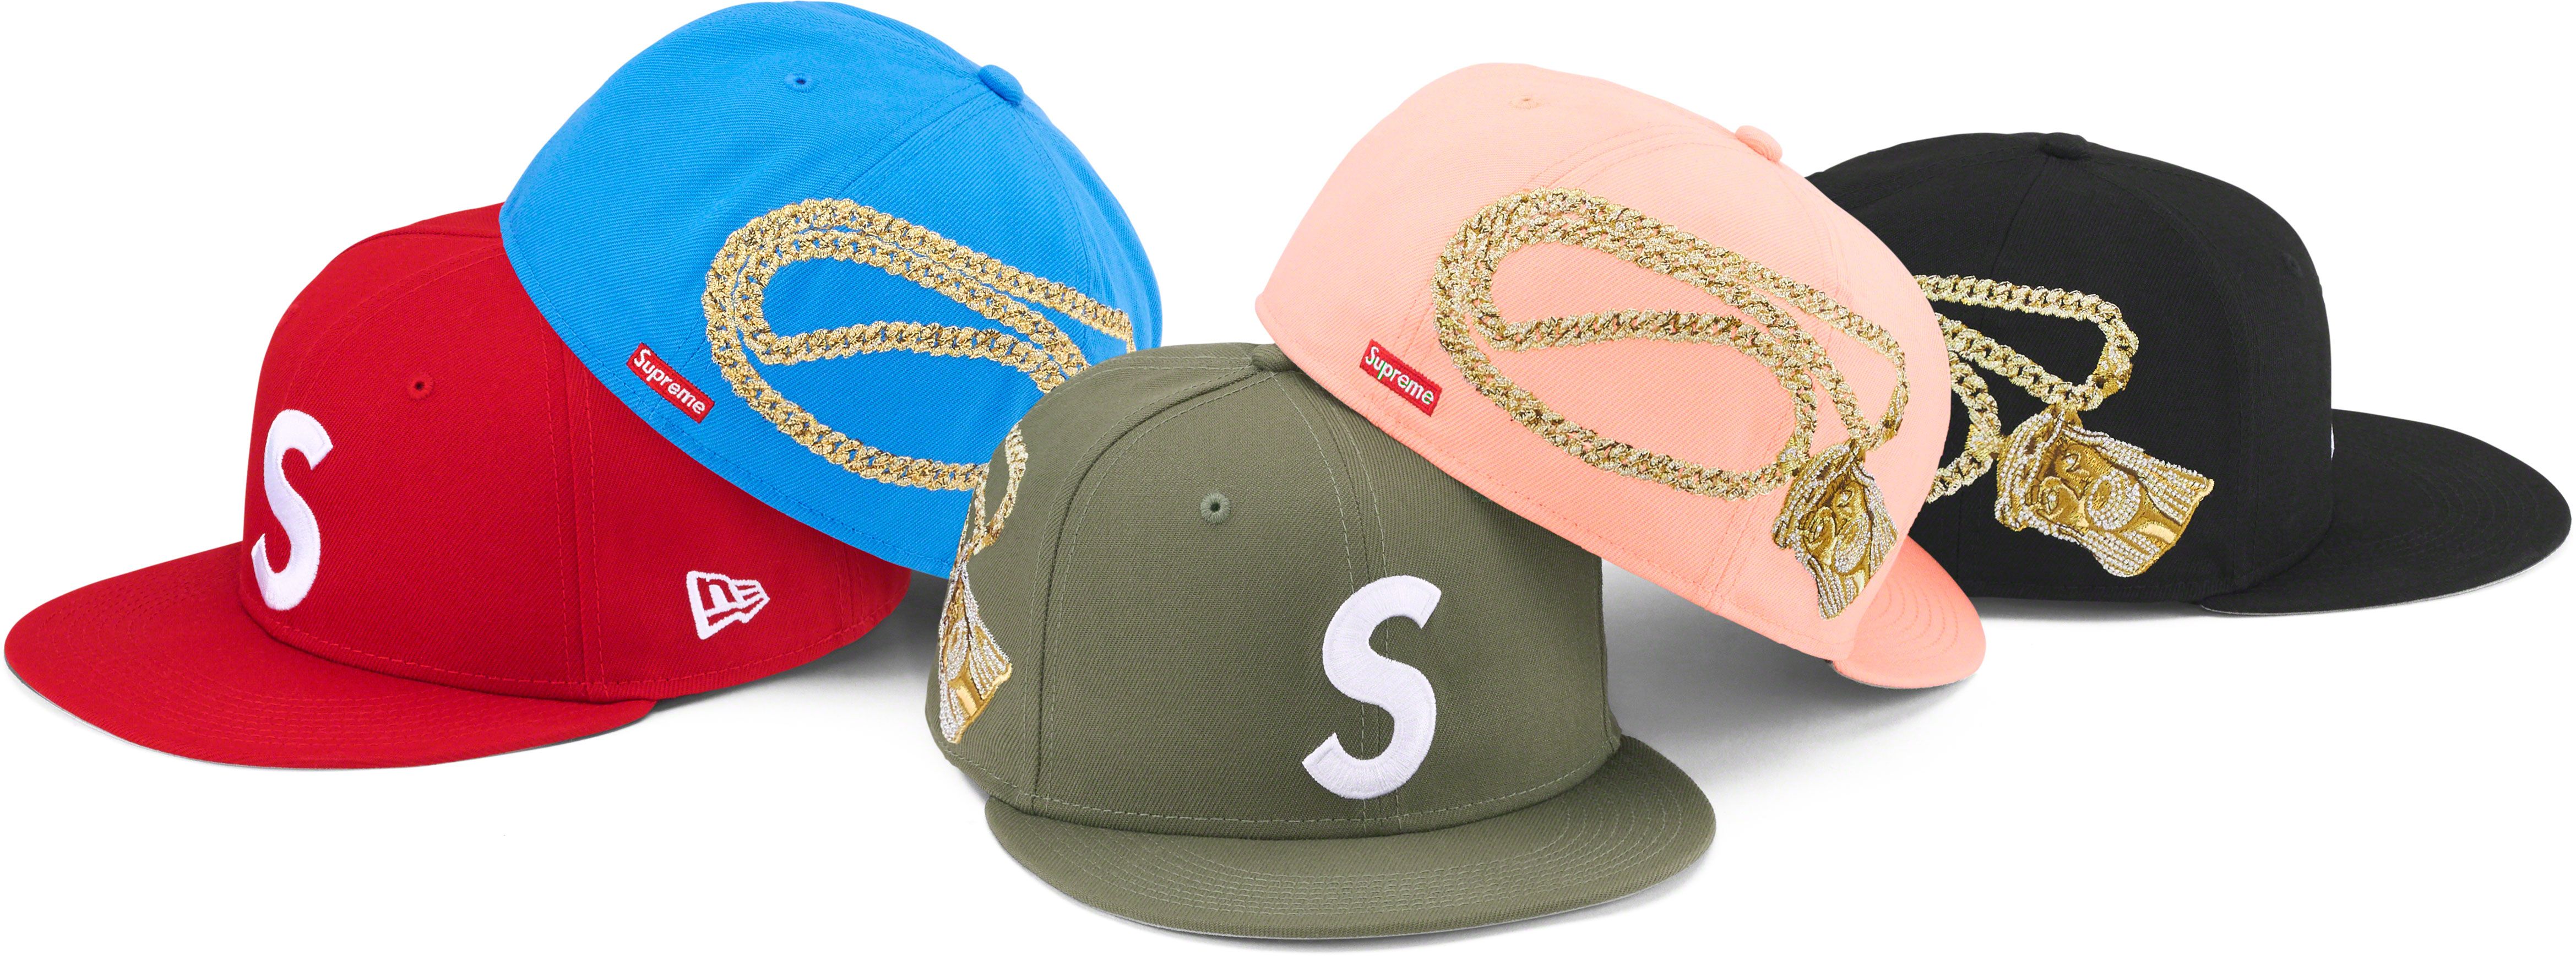 Supreme Logo Hats for Women